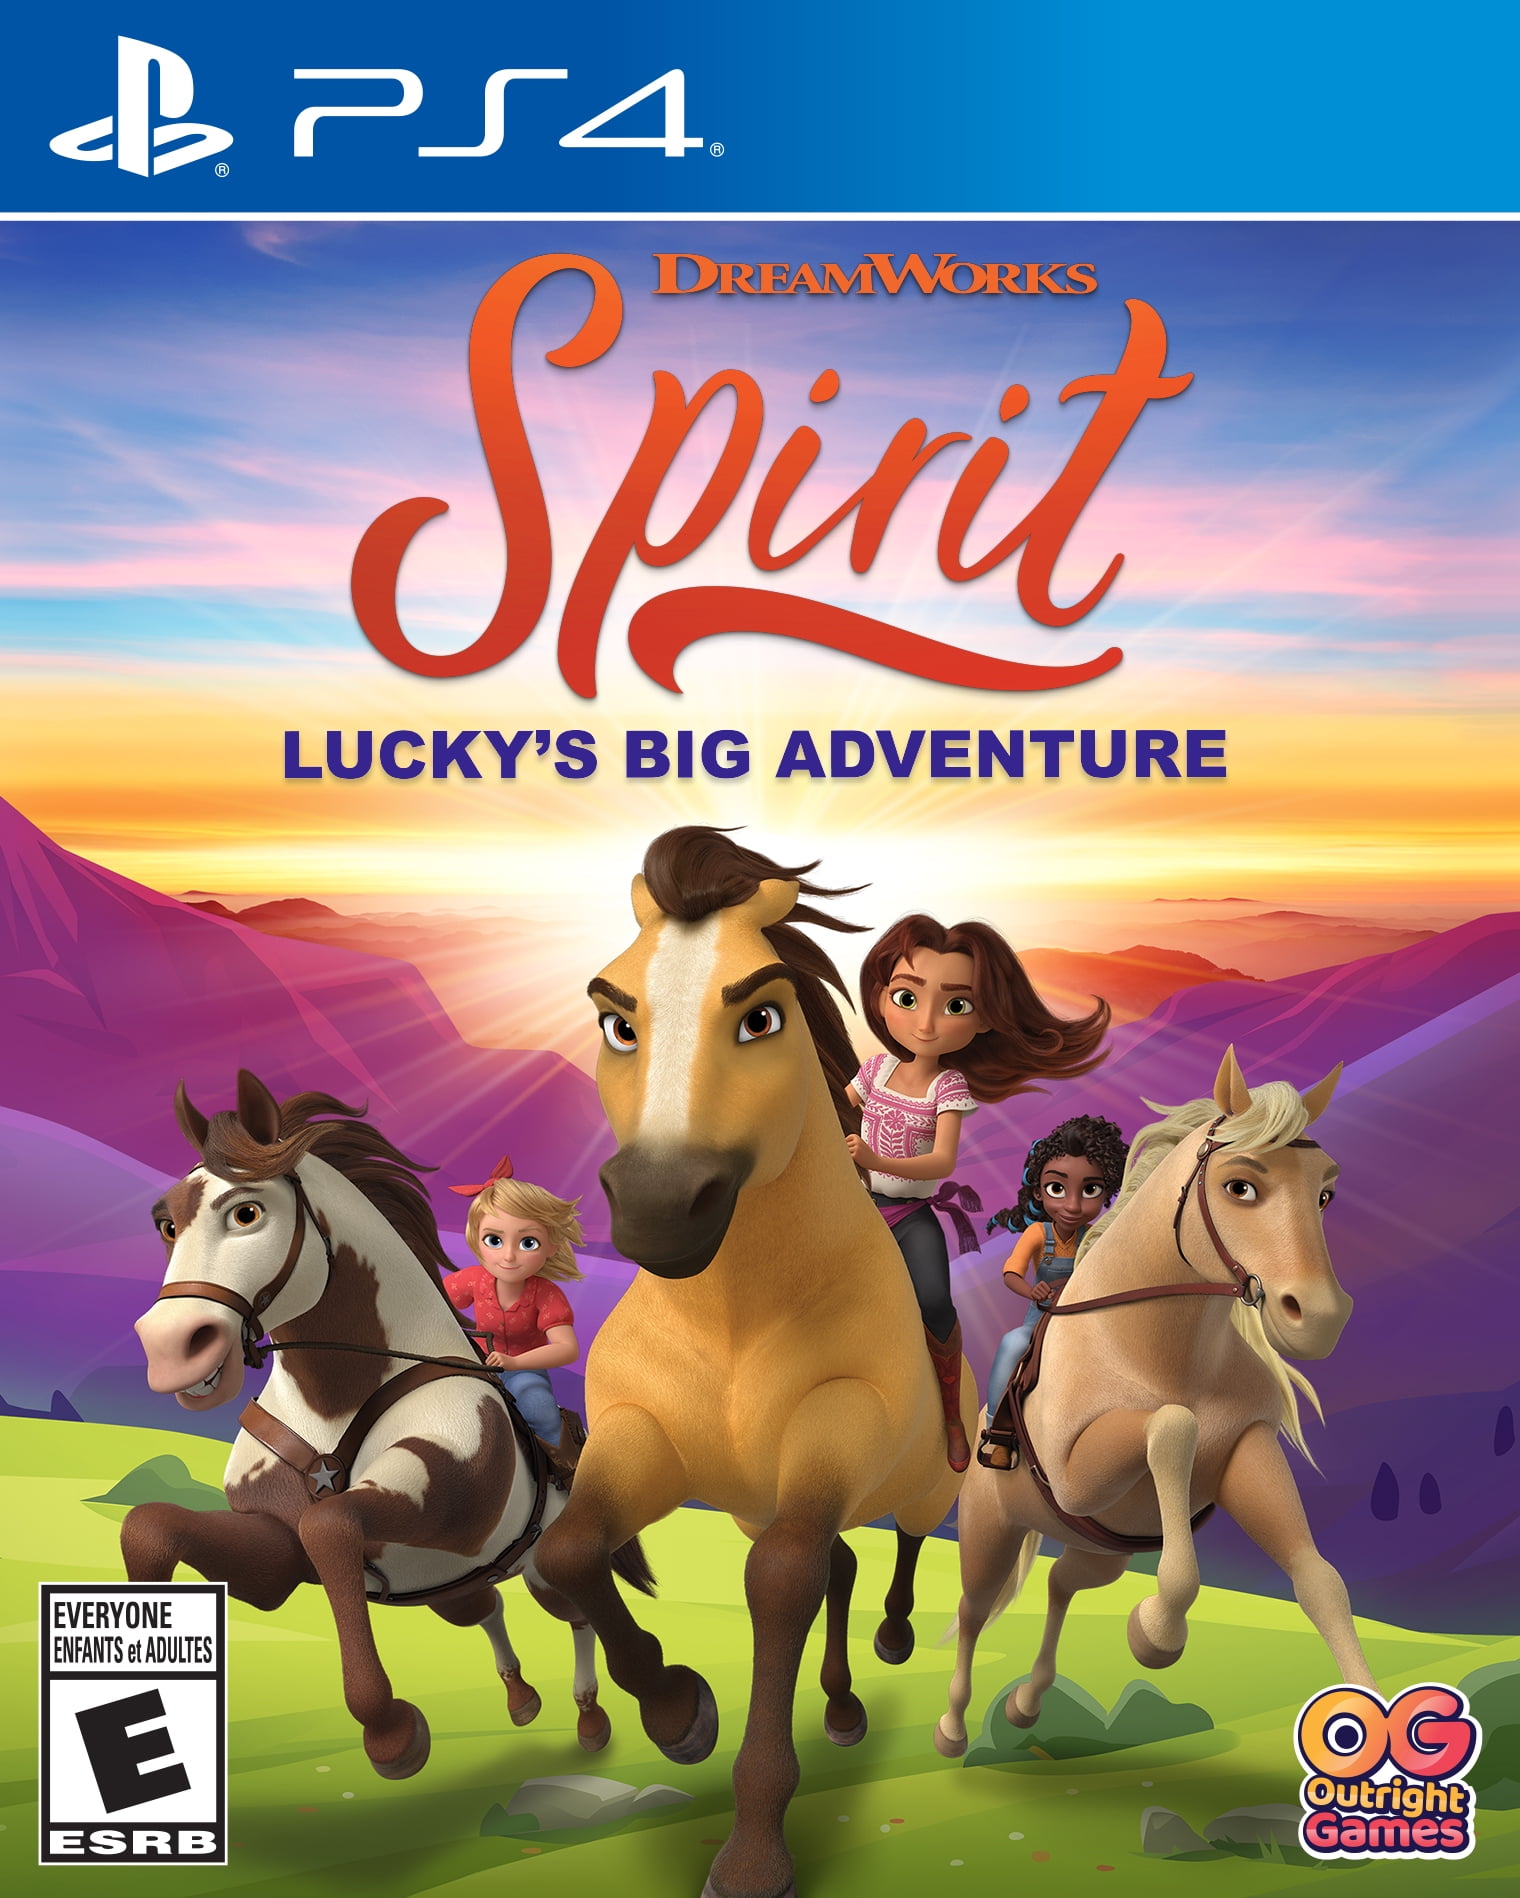 DreamWorks Spirit Lucky’s Big Adventure - PlayStation 4